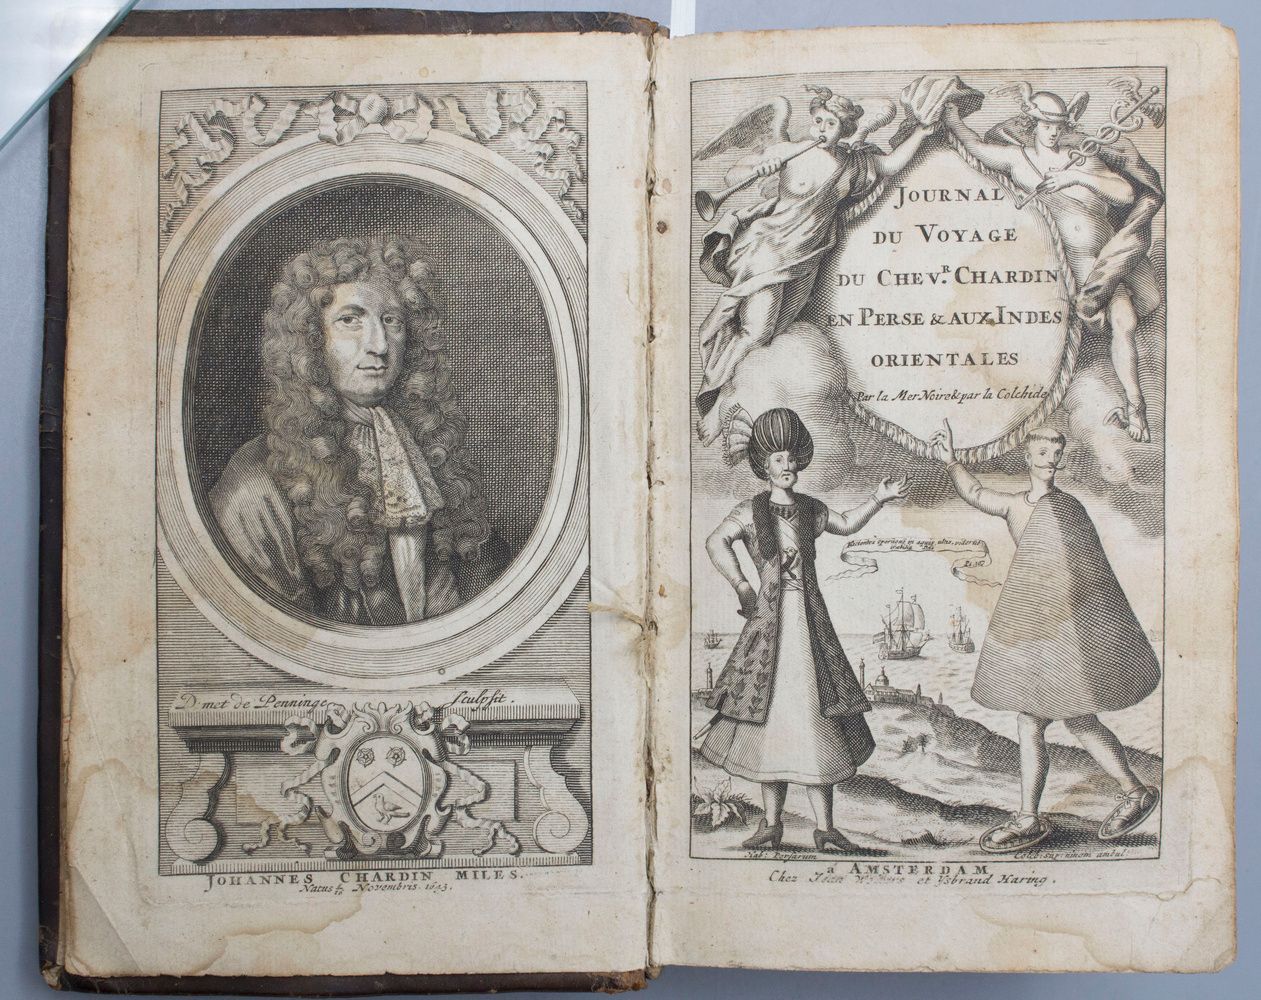 Johannes Chardin, 'Journal du Voyage de Chevalier Chardin', Amsterdam & Paris, E&hellip;